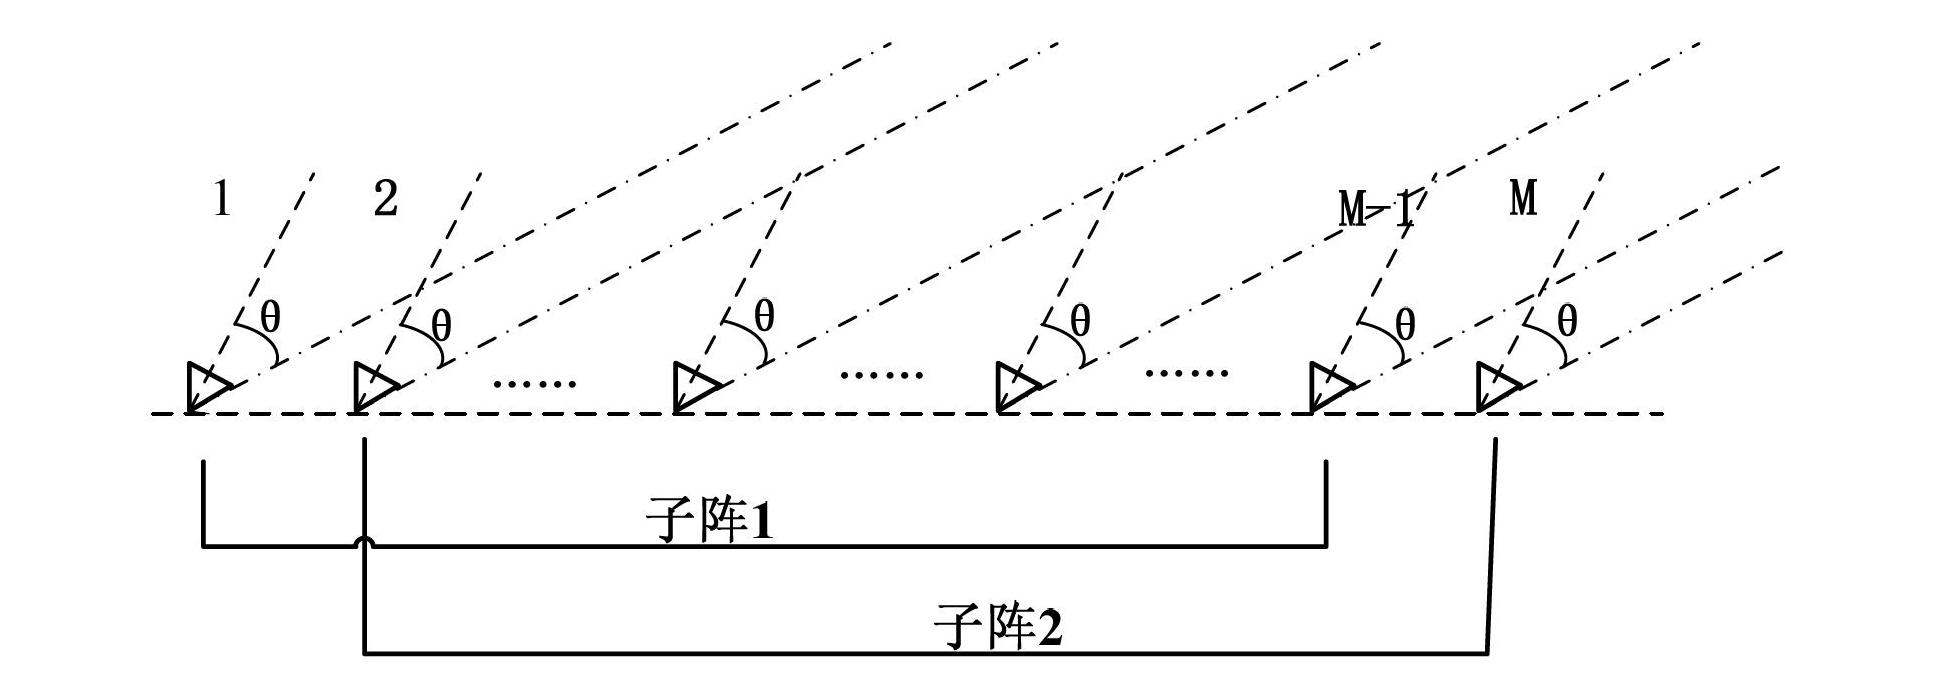 Quick processing method for sensor antenna array received signals